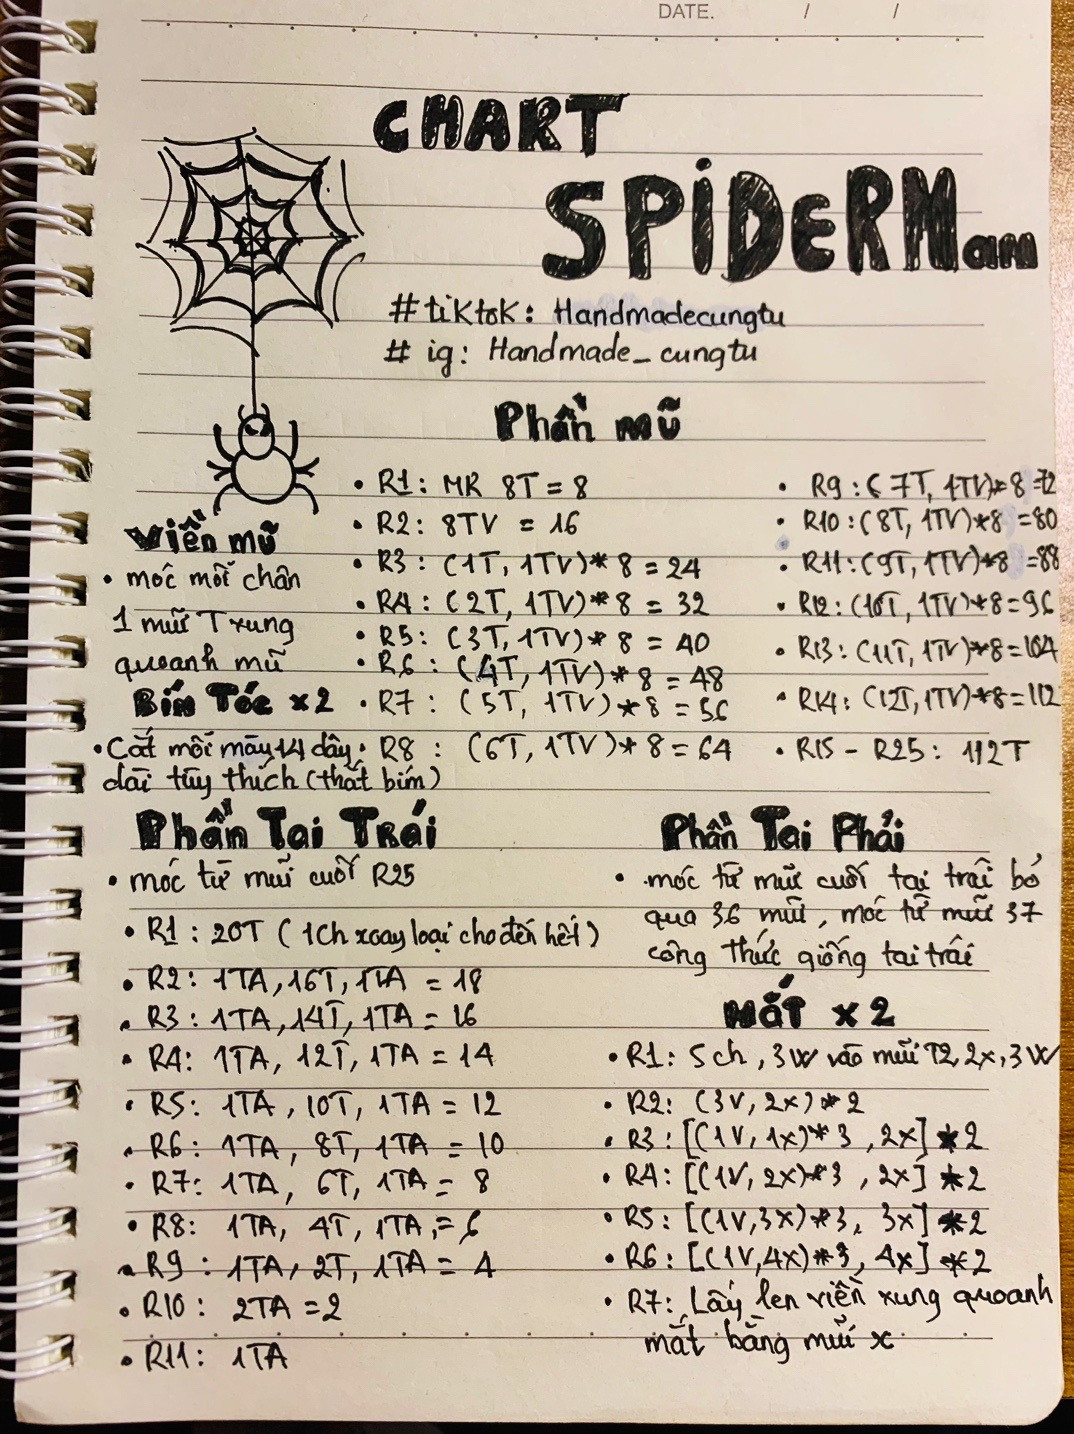 chart móc mũ spider man